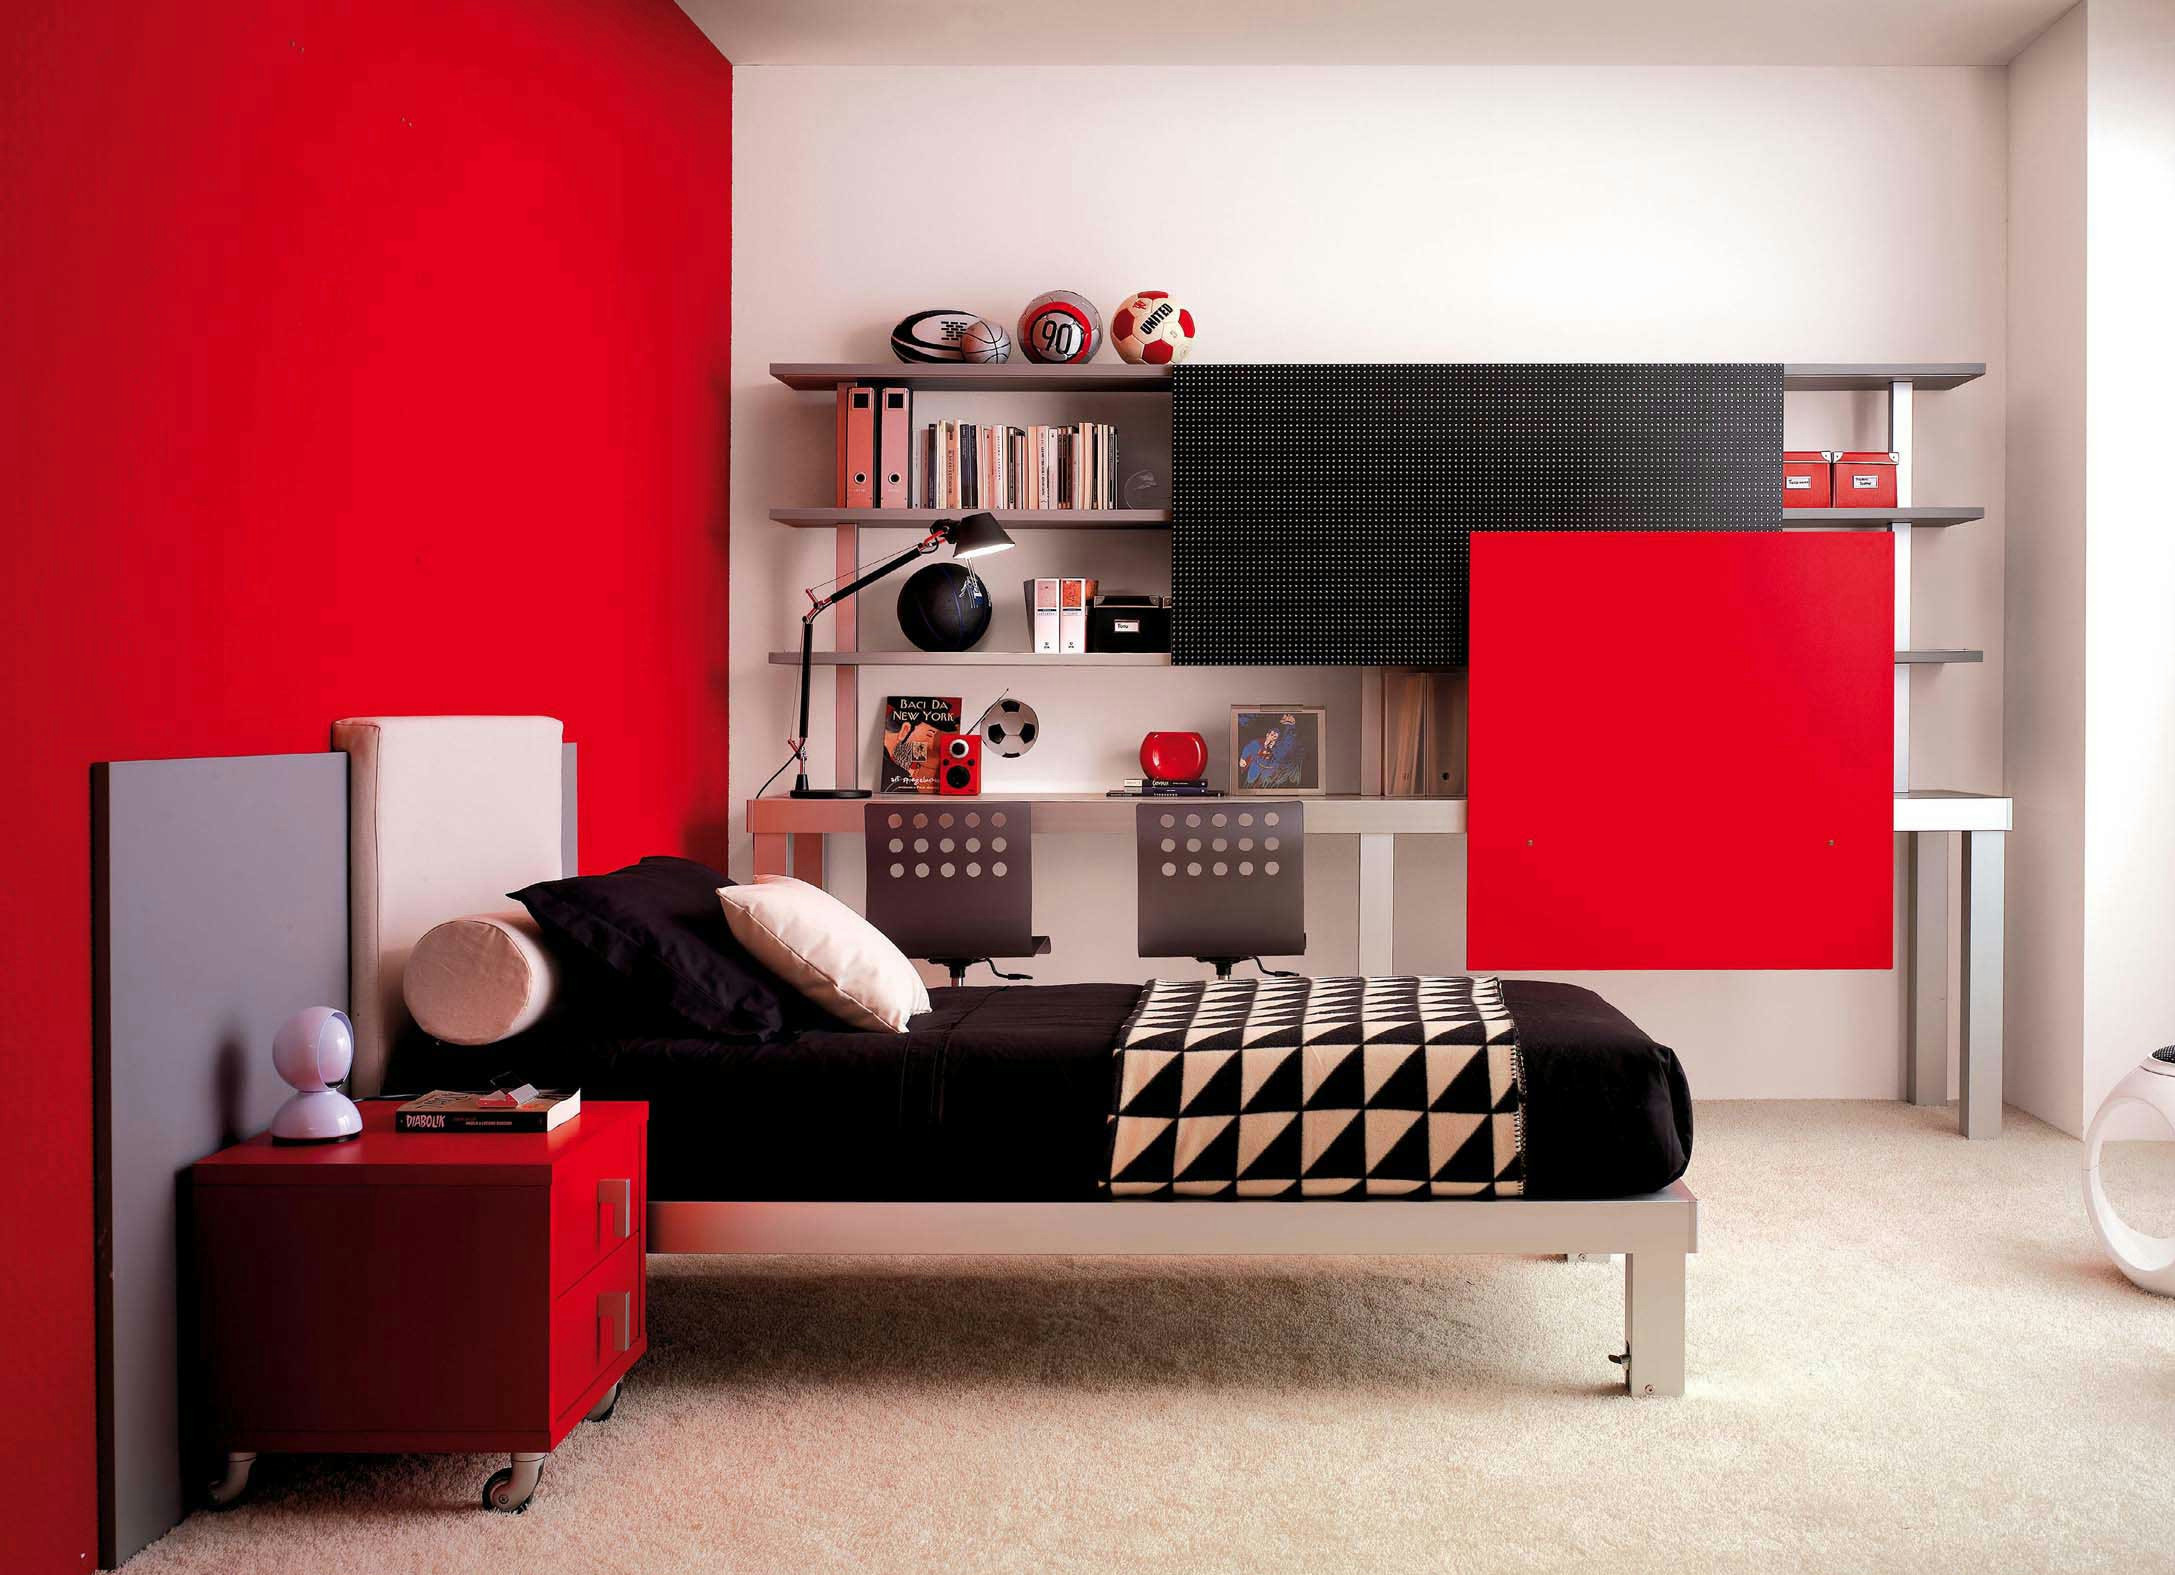 2175x1575 Bedroom Red Cool Teenage Cool Bedroom Wallpaper Designs Hd with Bedroom Red  Cool Teenage Cool Bedroom Picture Rooms for Teens